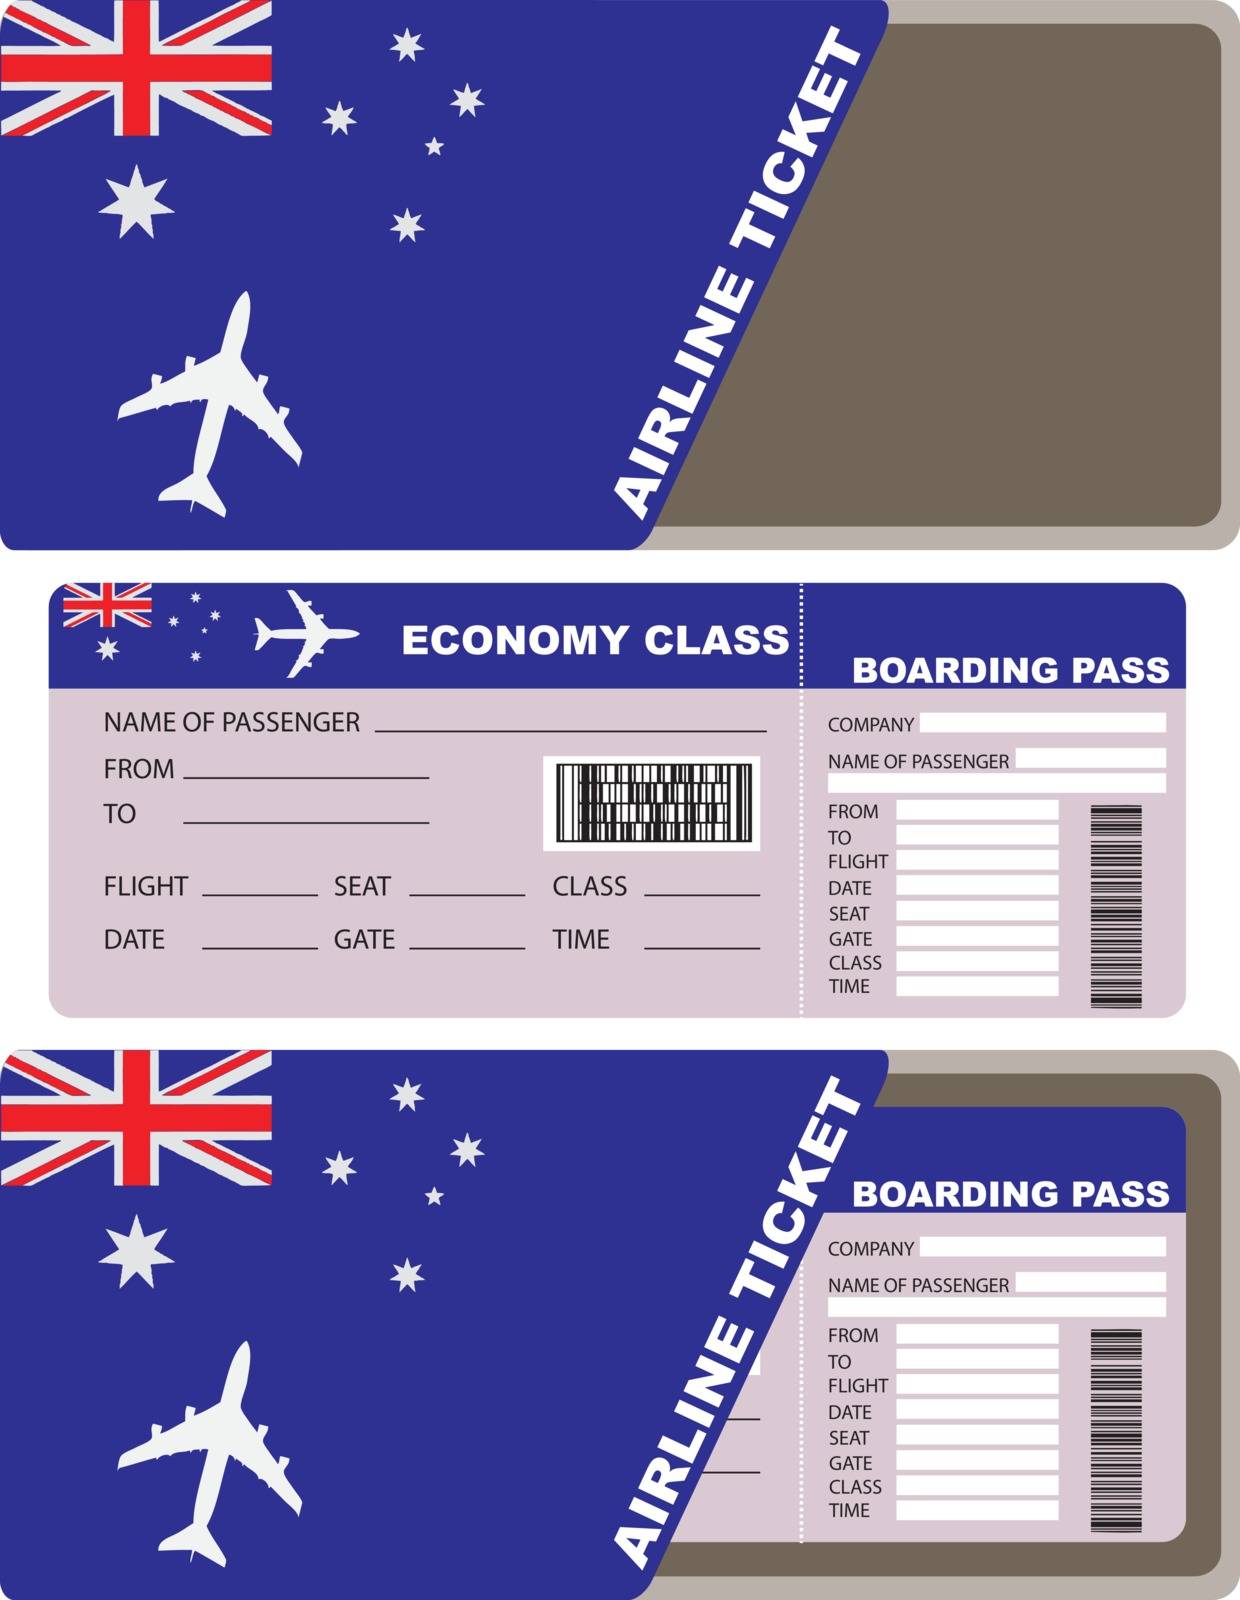 Plane ticket first class in Australia. Vector illustration.